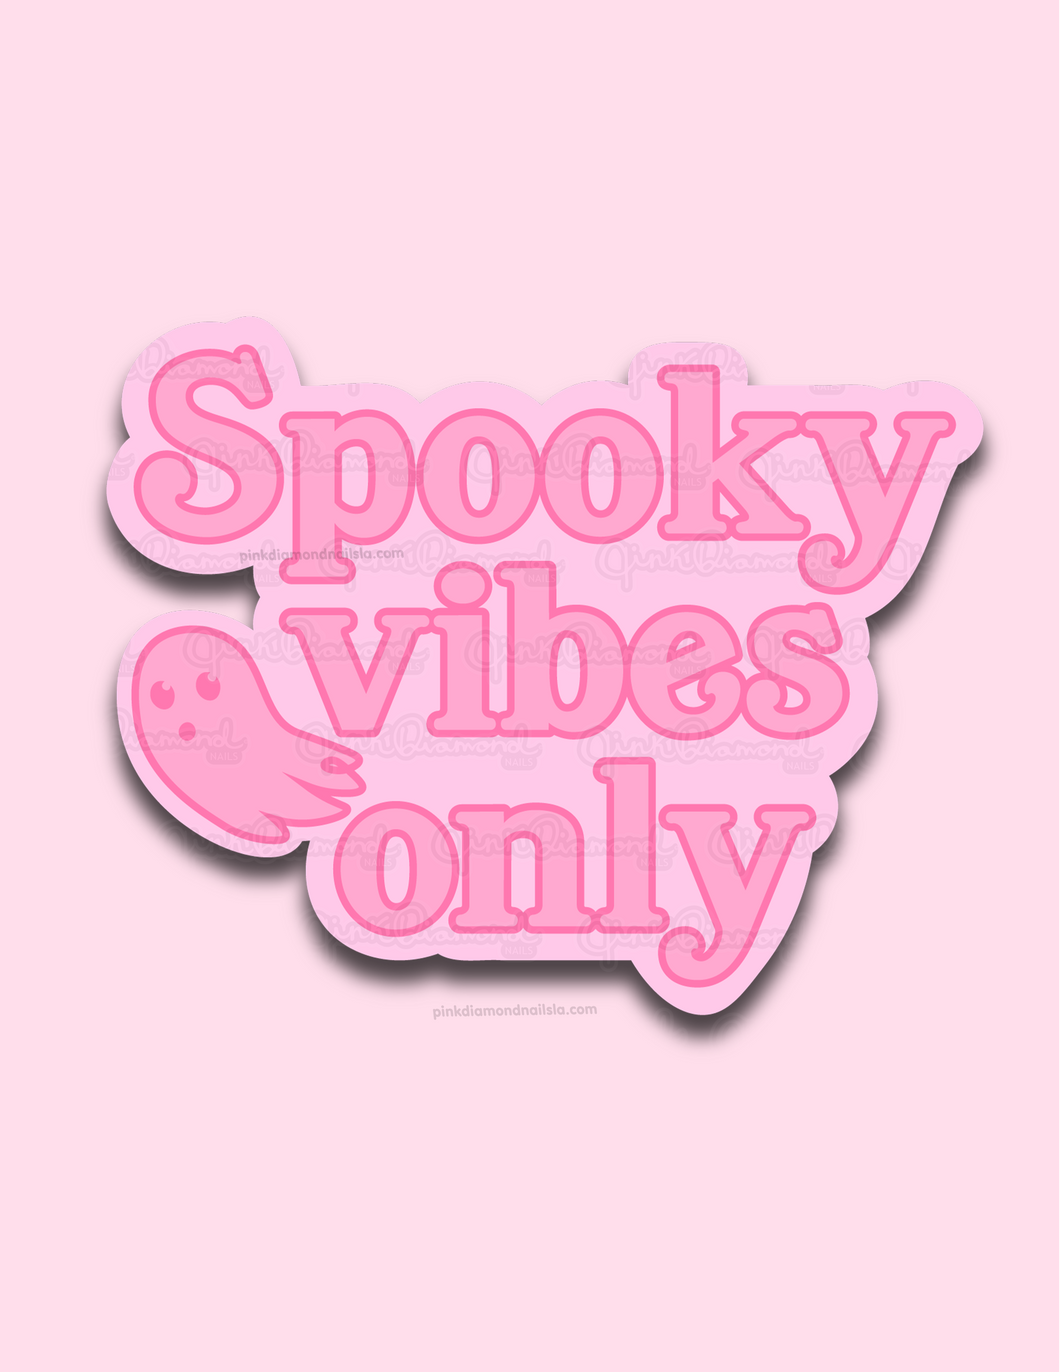 Spooky vibes only - Vinyl sticker